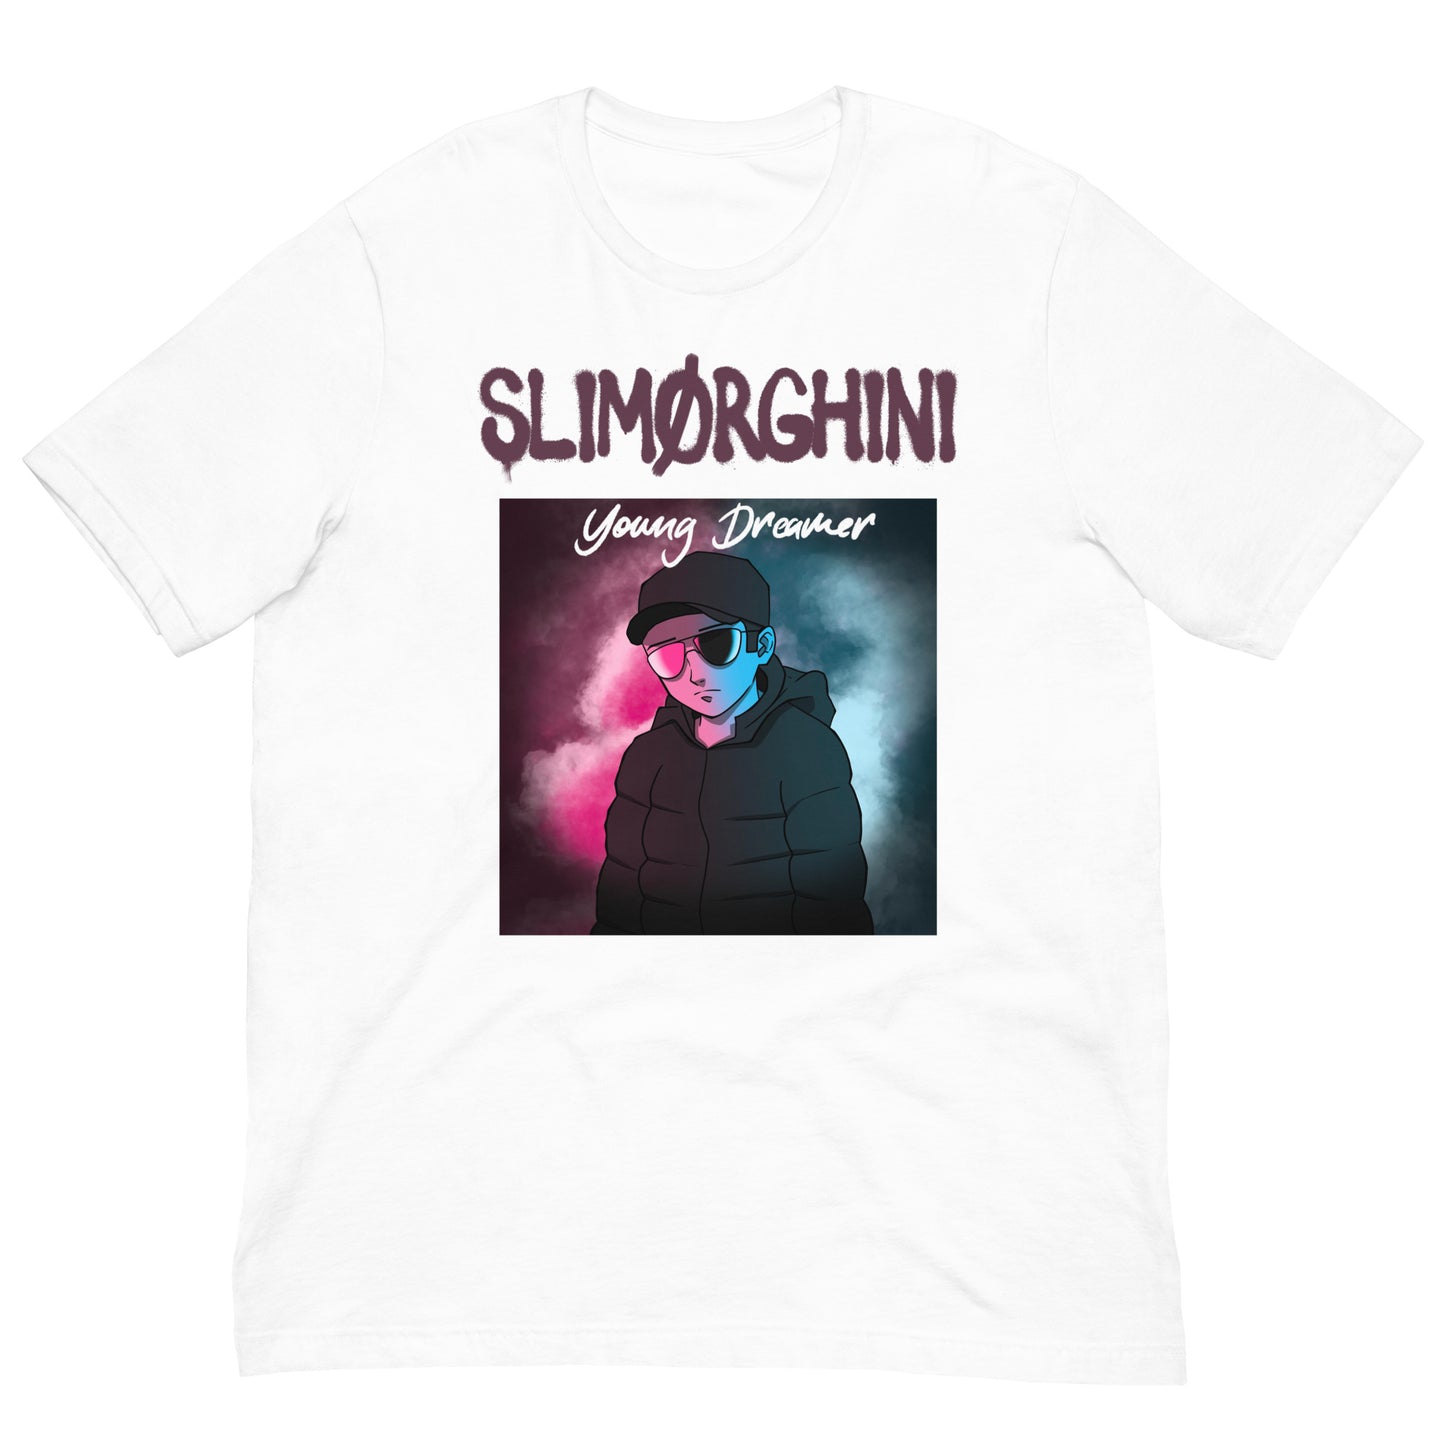 OG Slimorghini T-Shirt